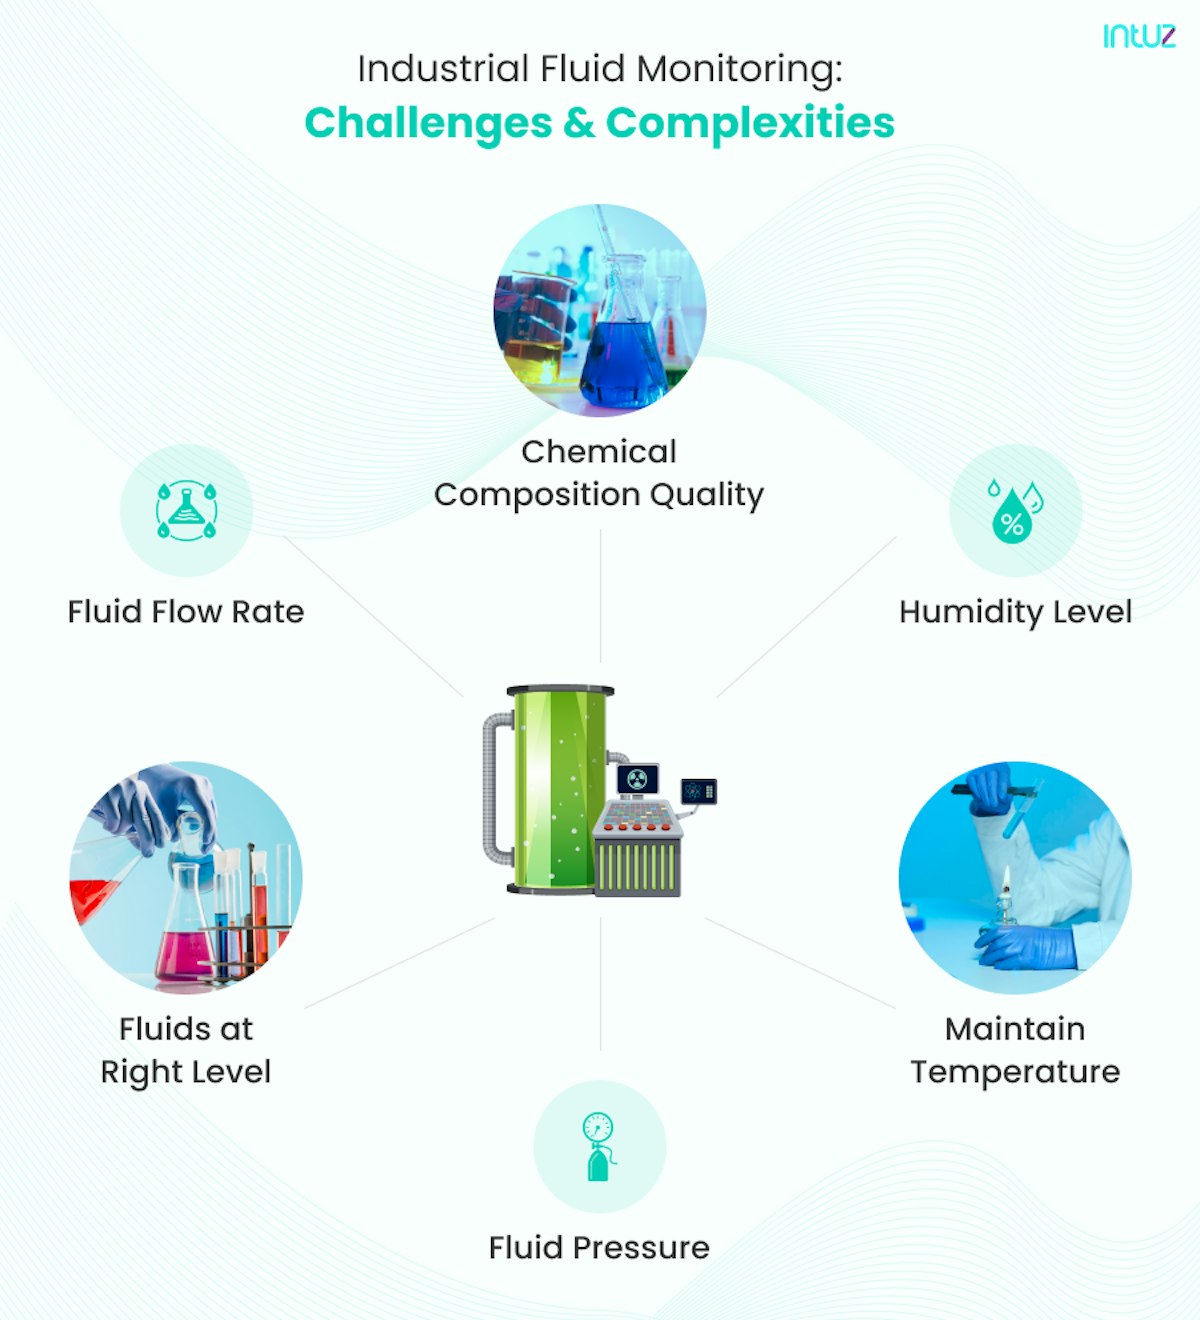 Challenges & Complexities in Industrial Fluid Monitoring